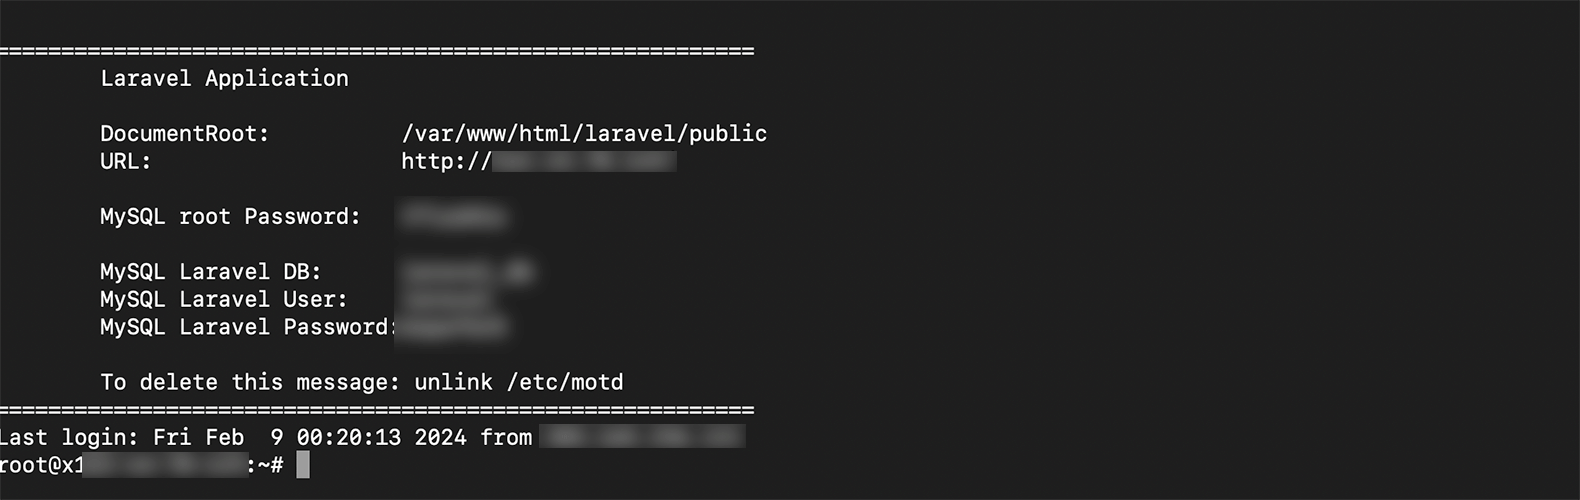 SSH接続時に表示されるLaravelアプリ情報